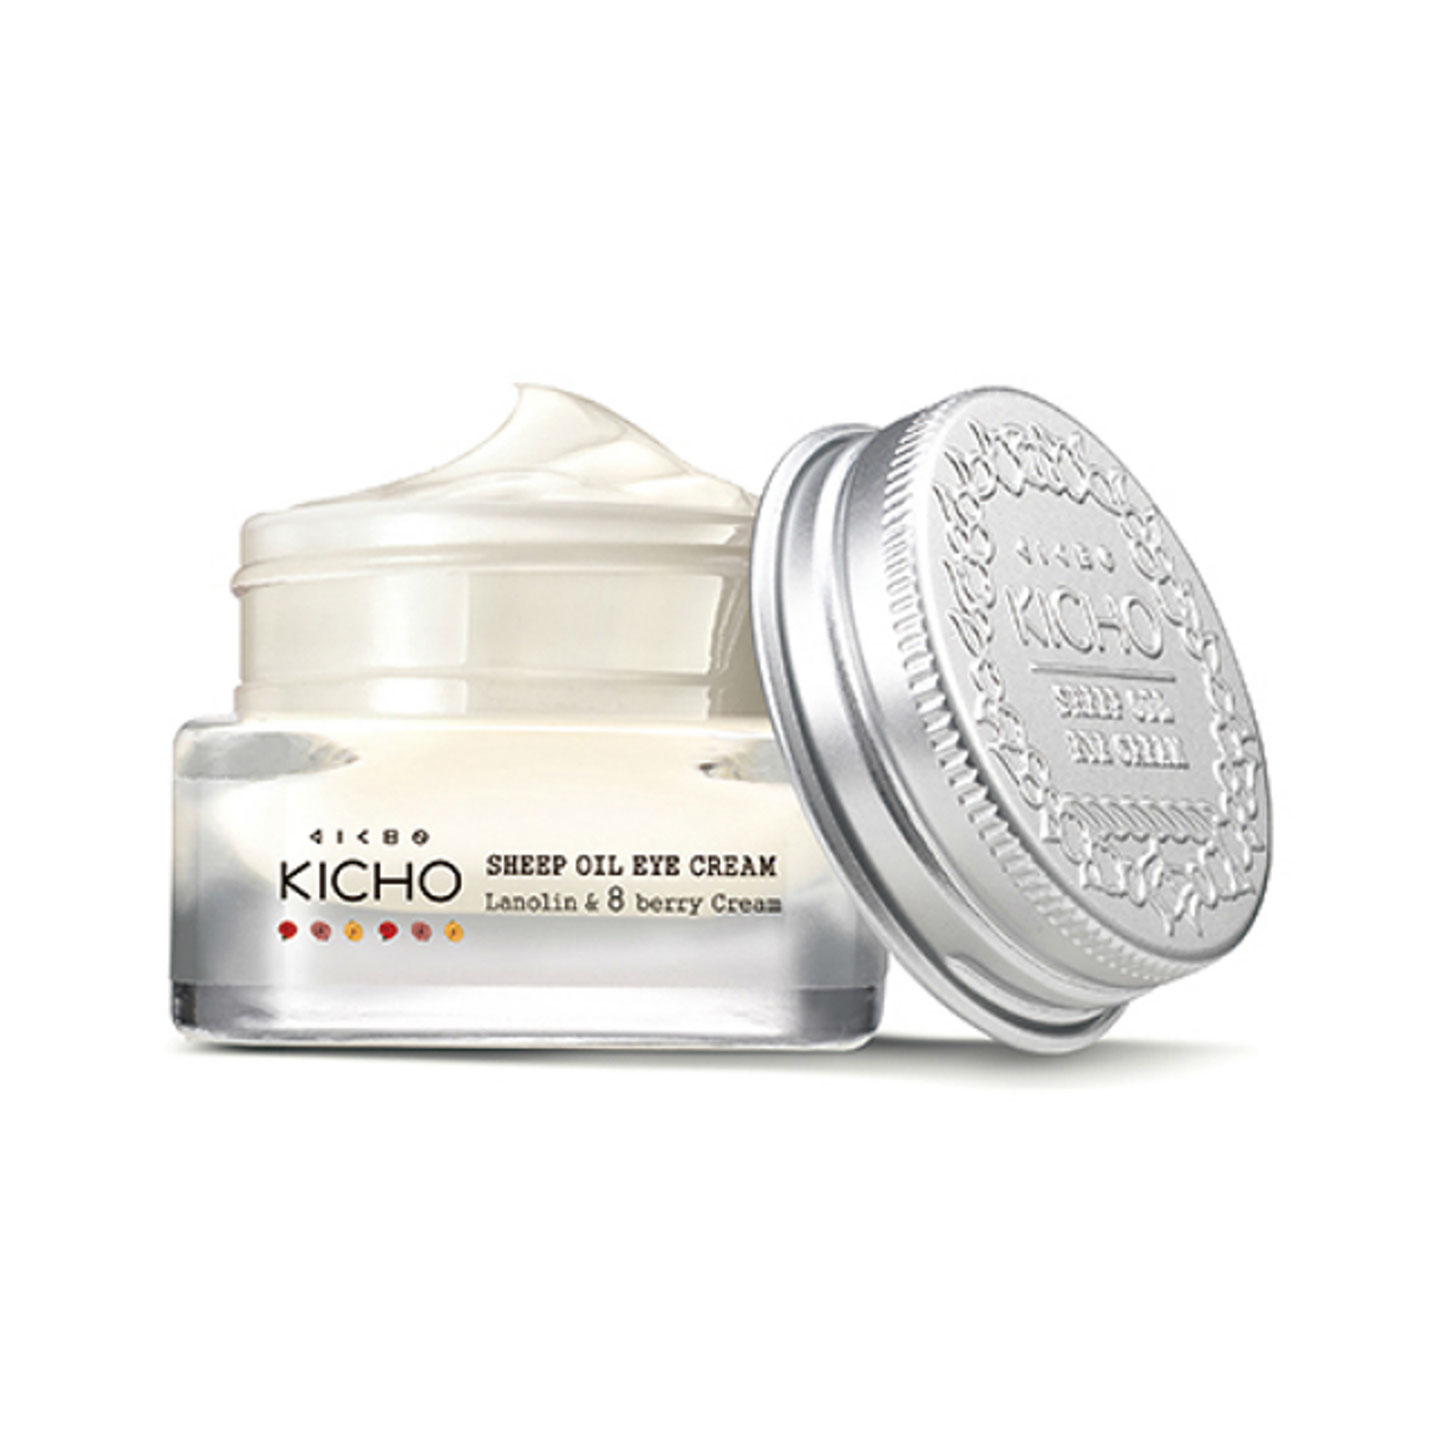 KICHO Sheep Oil Eye Cream